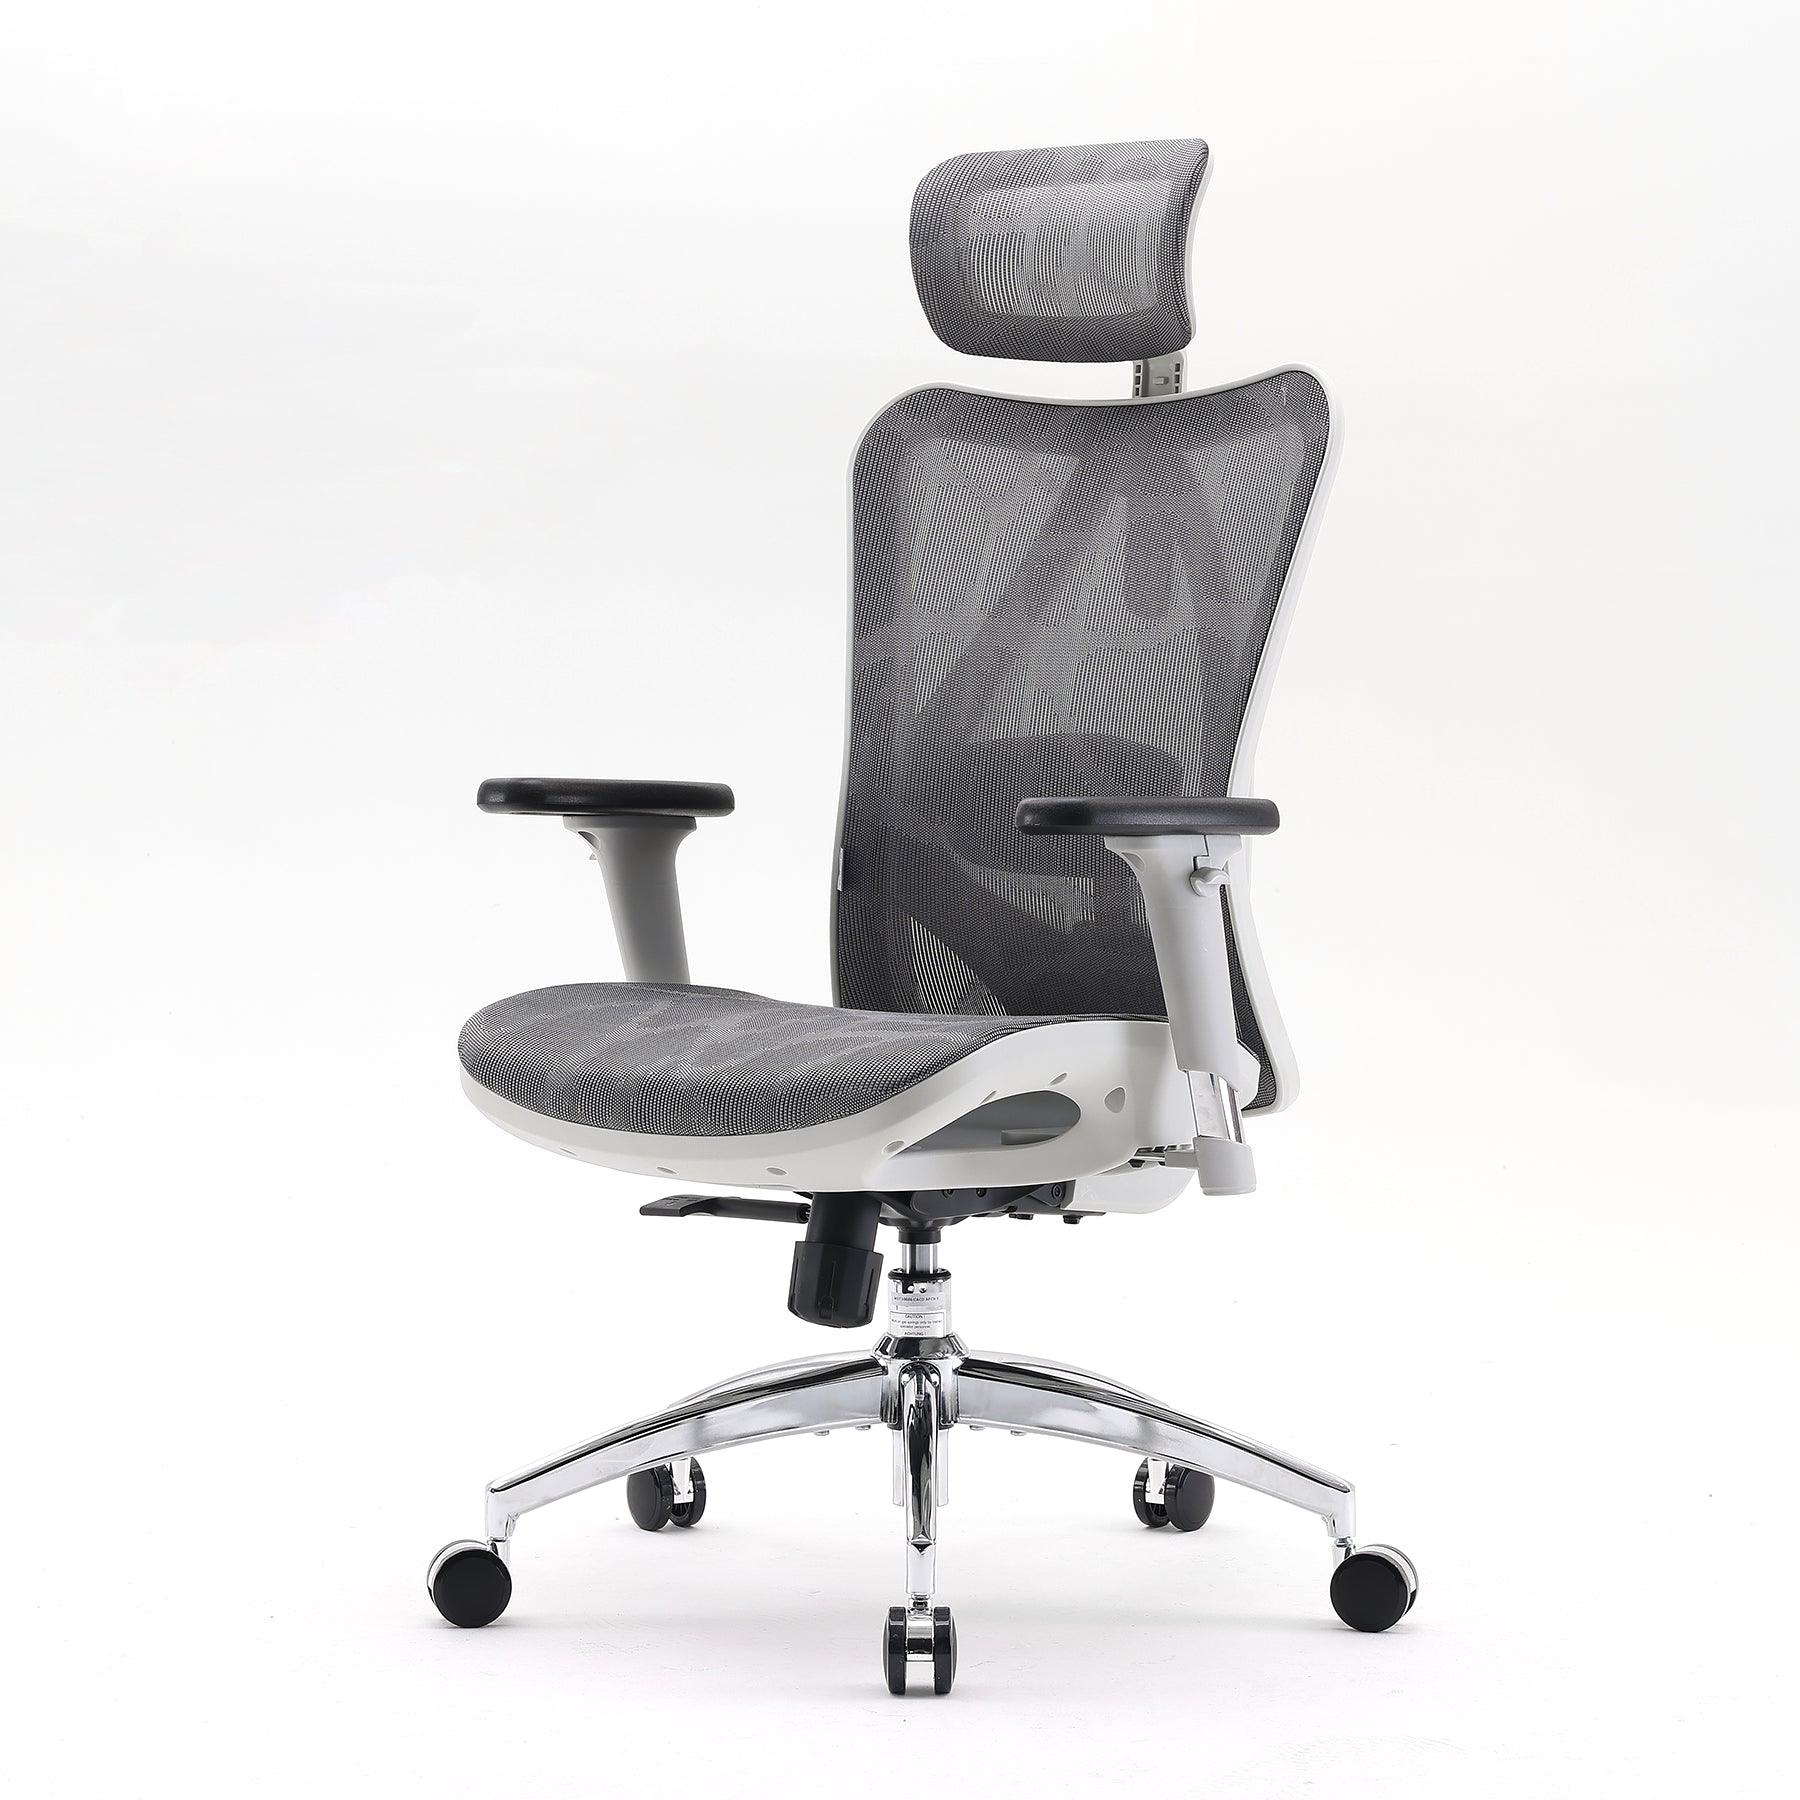 SIHOO M57 Ergonomic Office Chair with 3 Way Armrests Lumbar